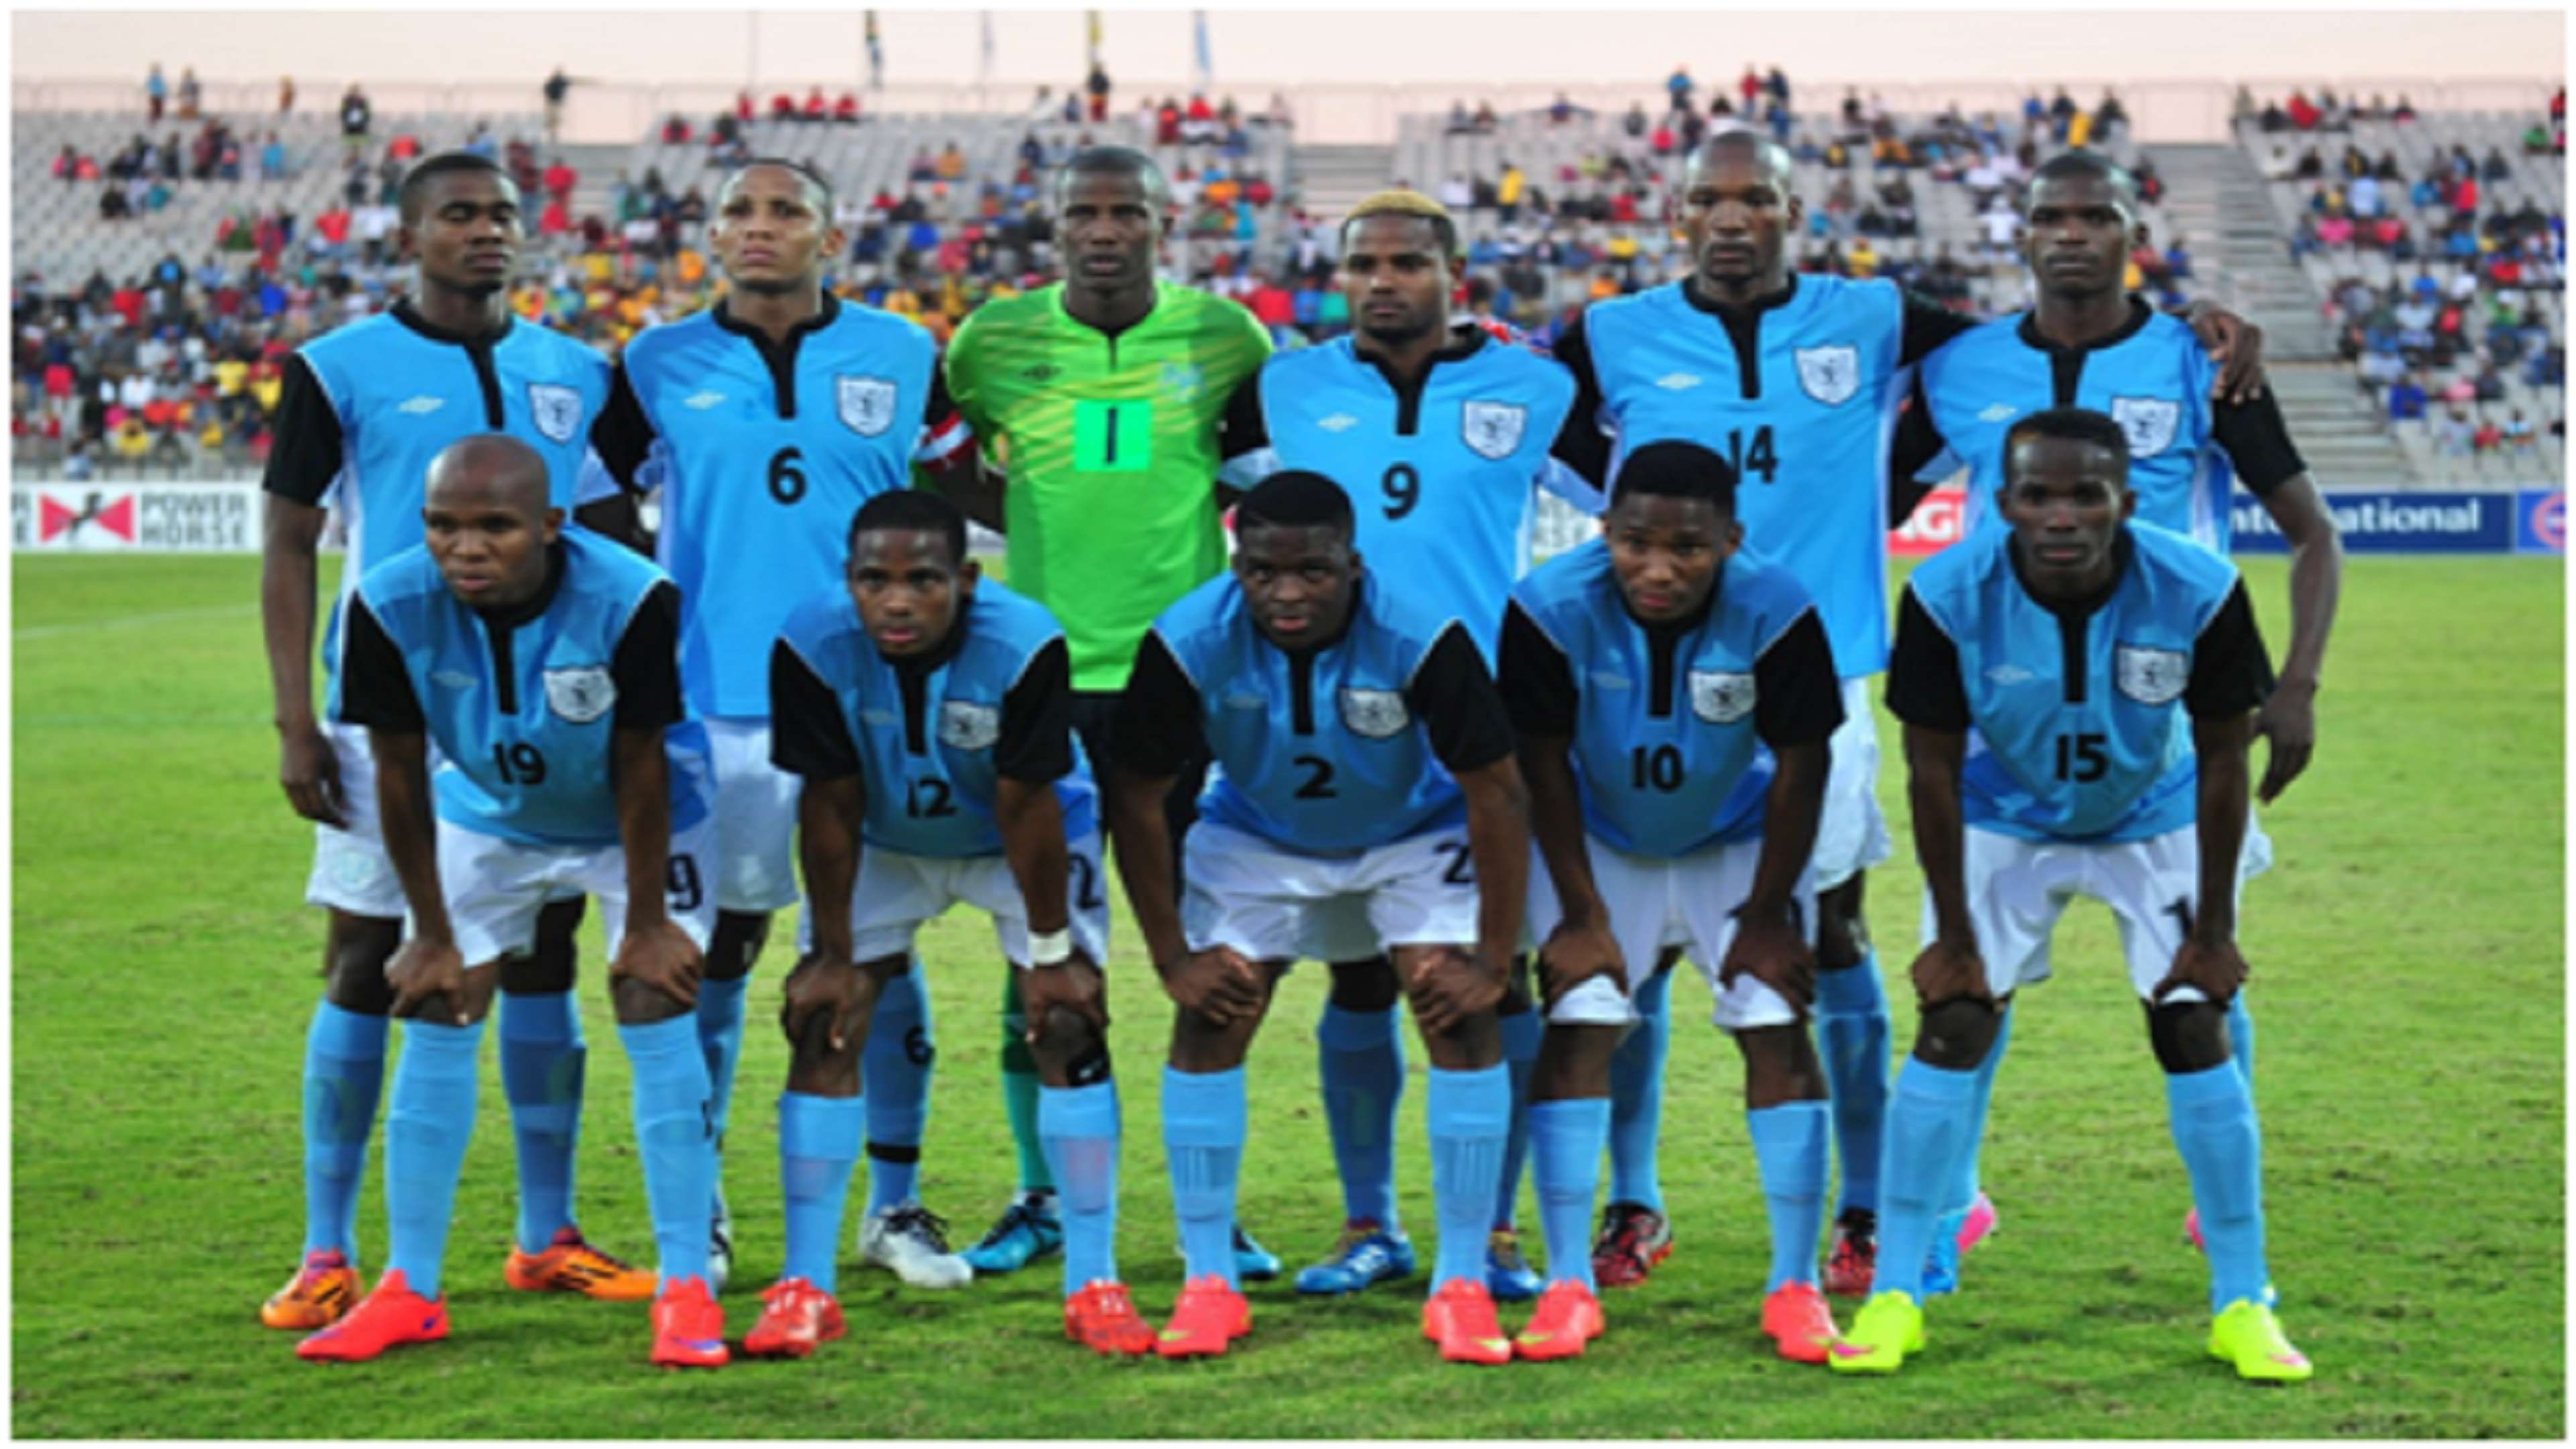 Botswana 24 may 2015 Cosafa Cup